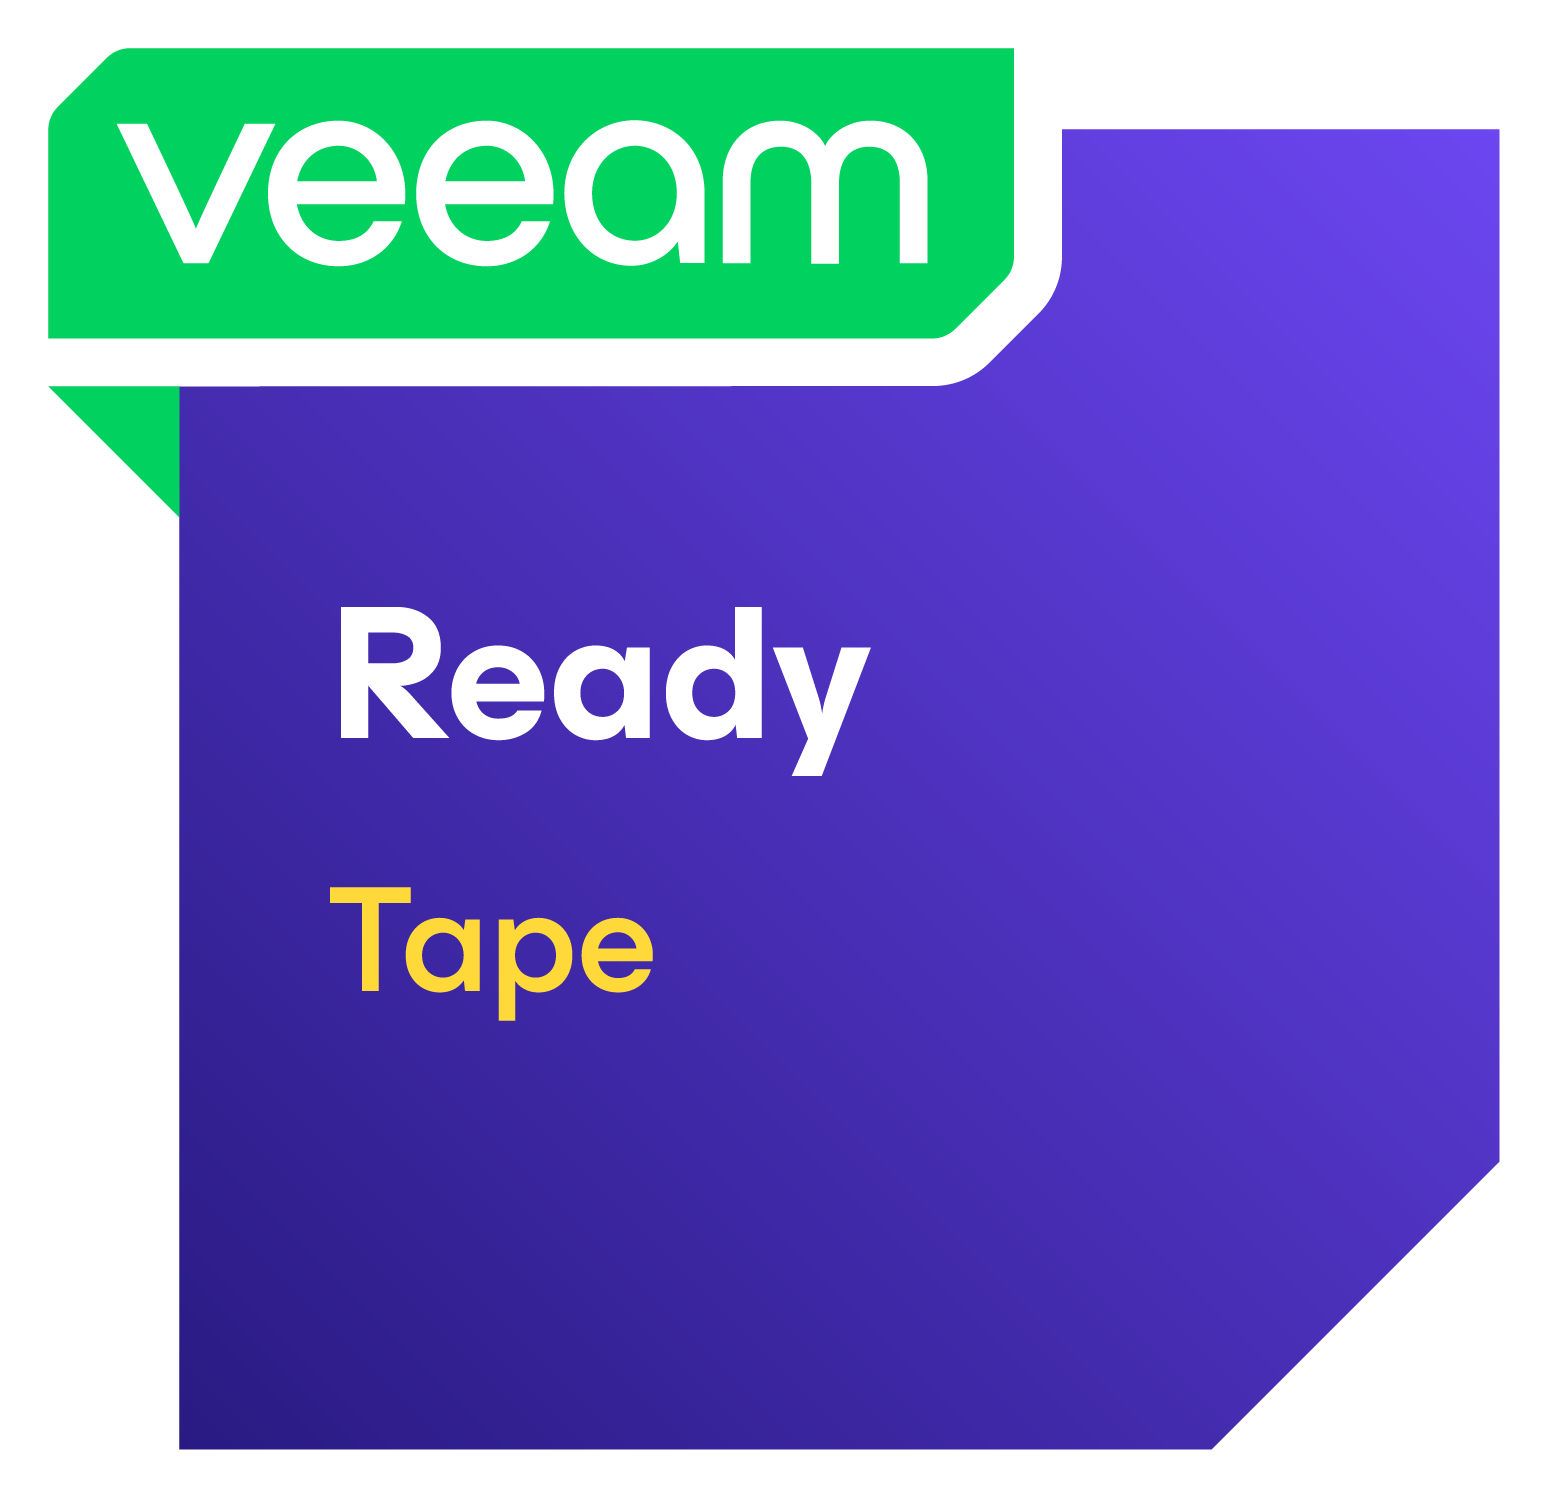 Veeam Ready - Tape